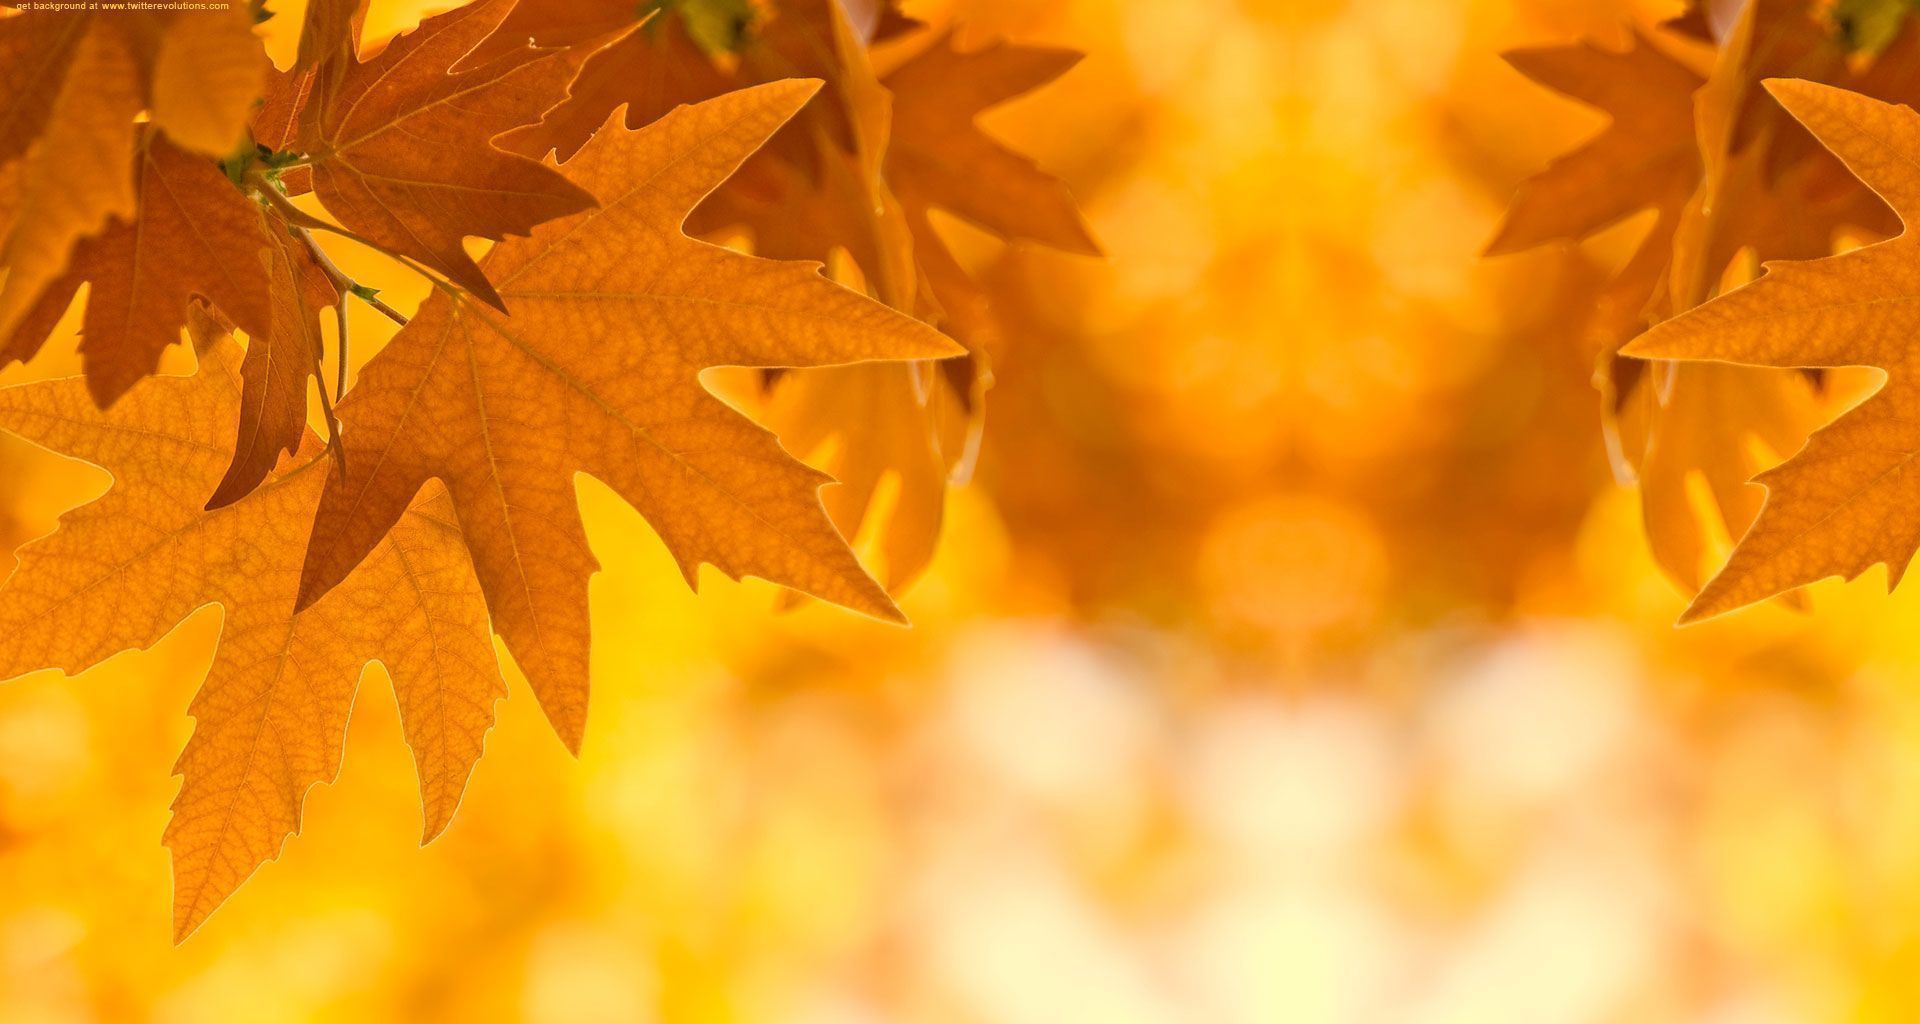 Autumn leaves Twitter background - Twitterevolutions